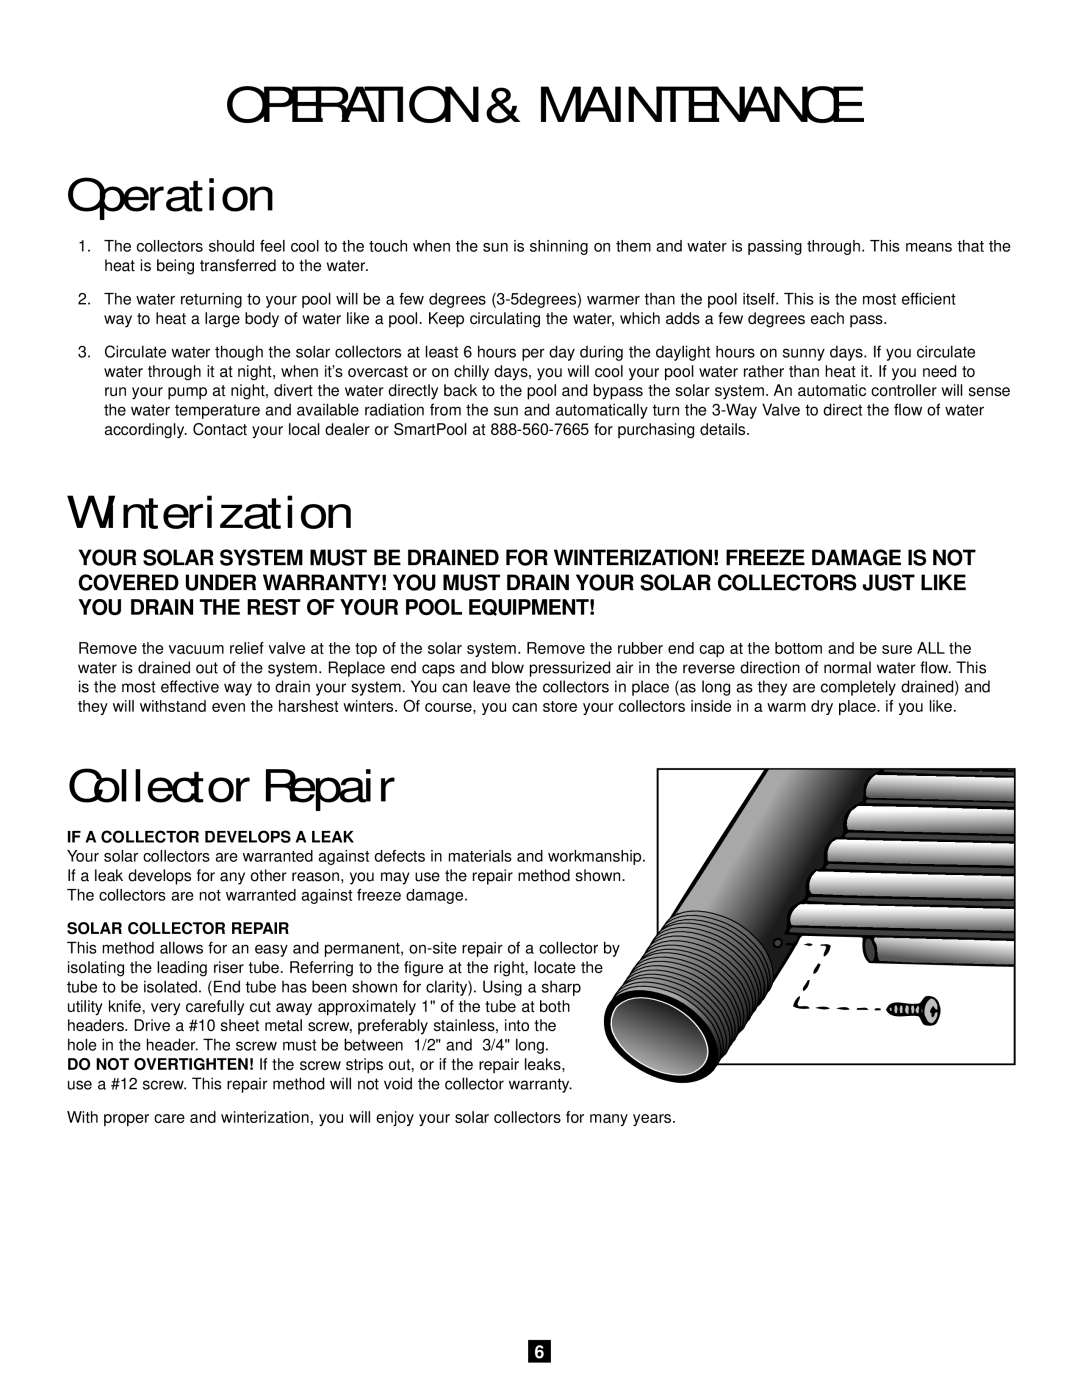 SmartPool Inc S601 operation manual Operation & Maintenance, Winterization, Collector Repair 